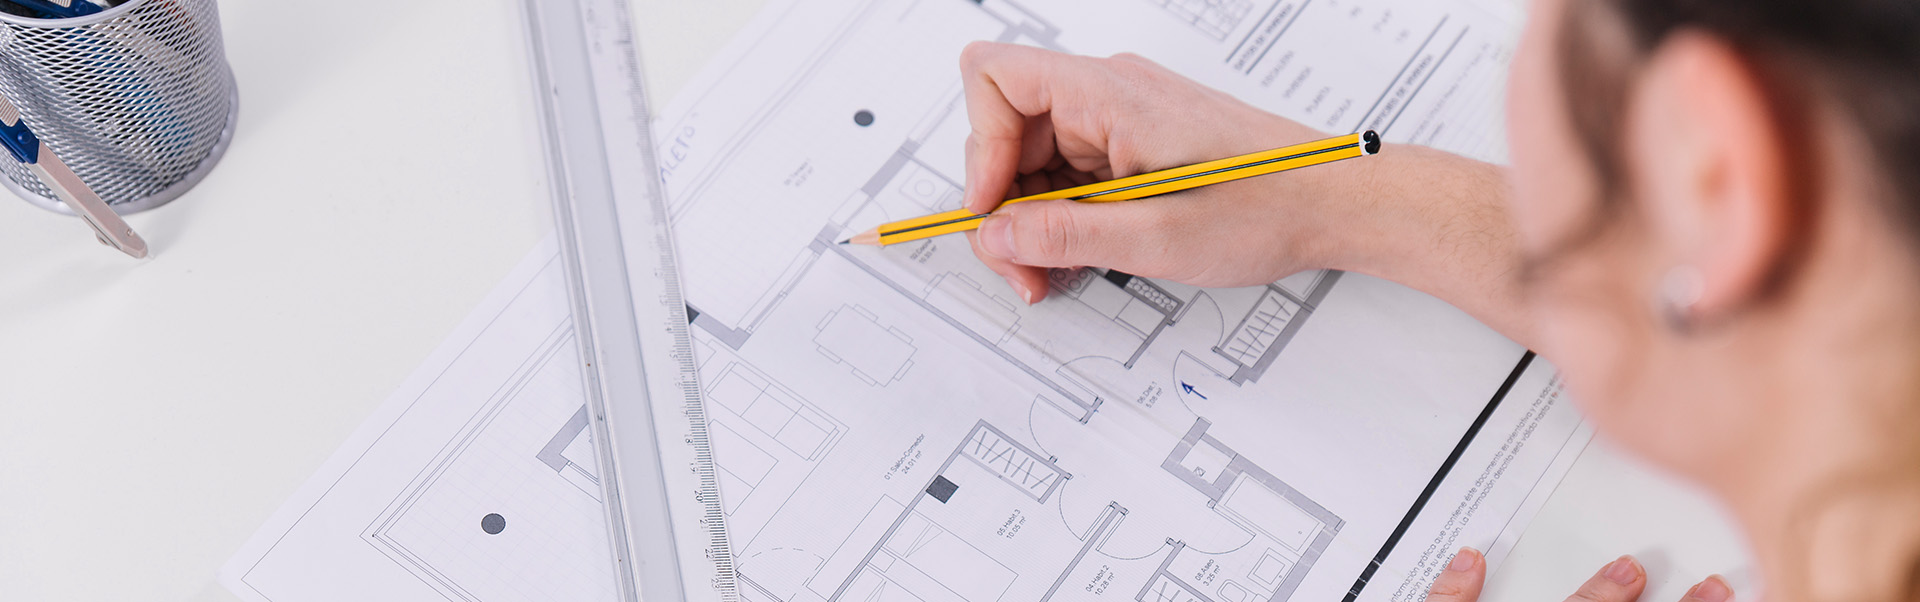 AutoCAD Drafting Technician drawing blueprints.  